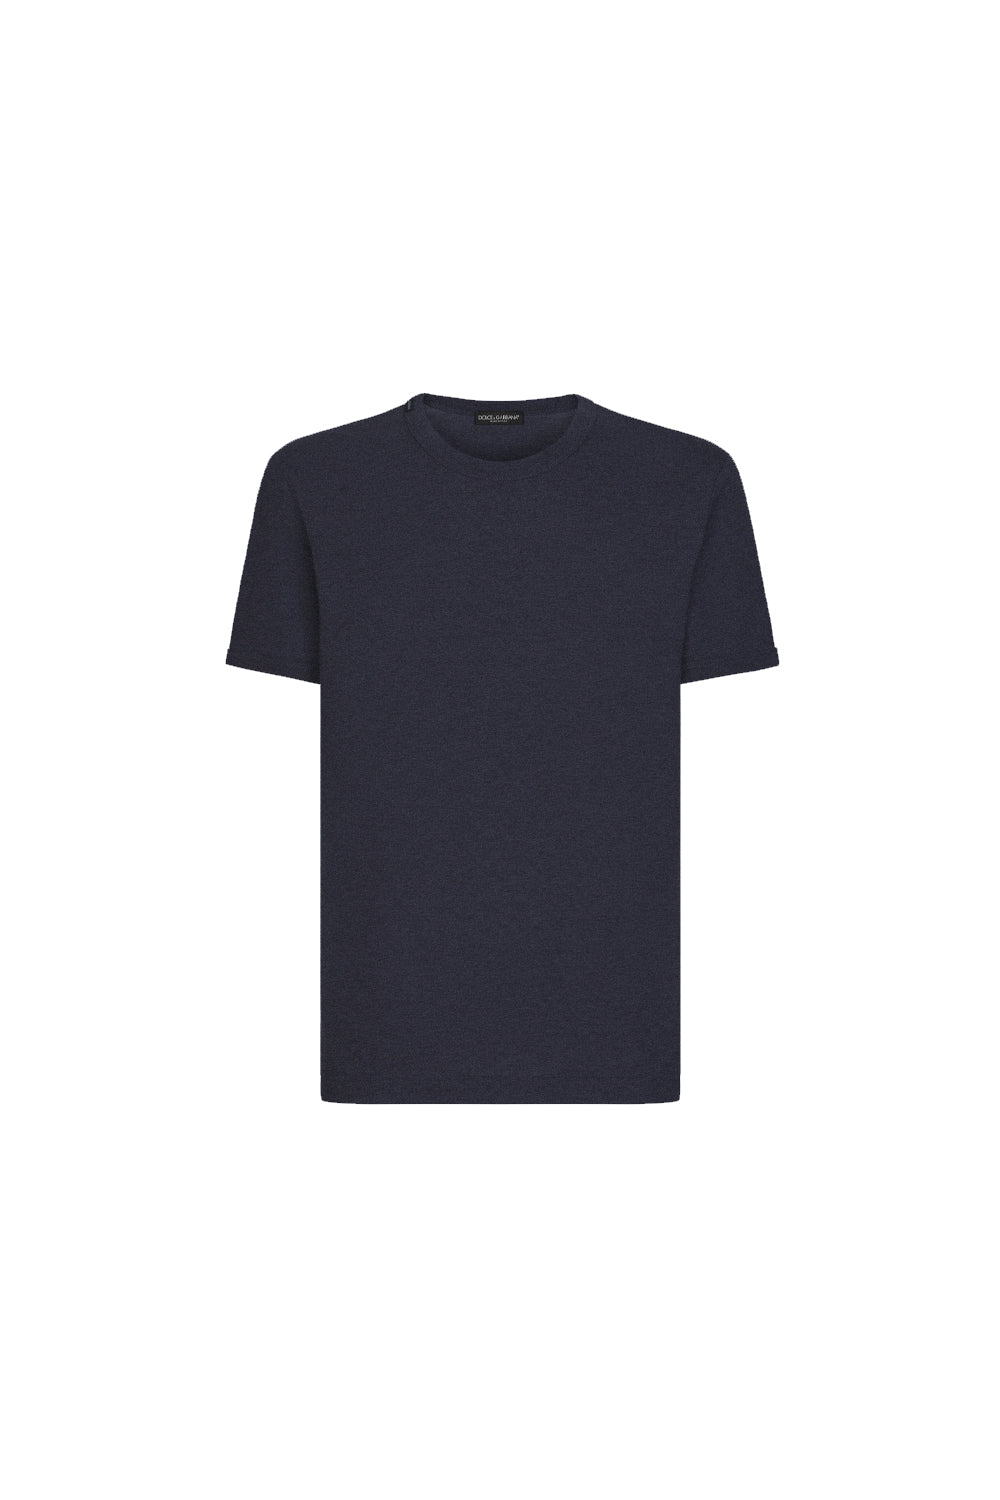 DOLCE & GABBANA T-shirt neck logo tag navy blue grey